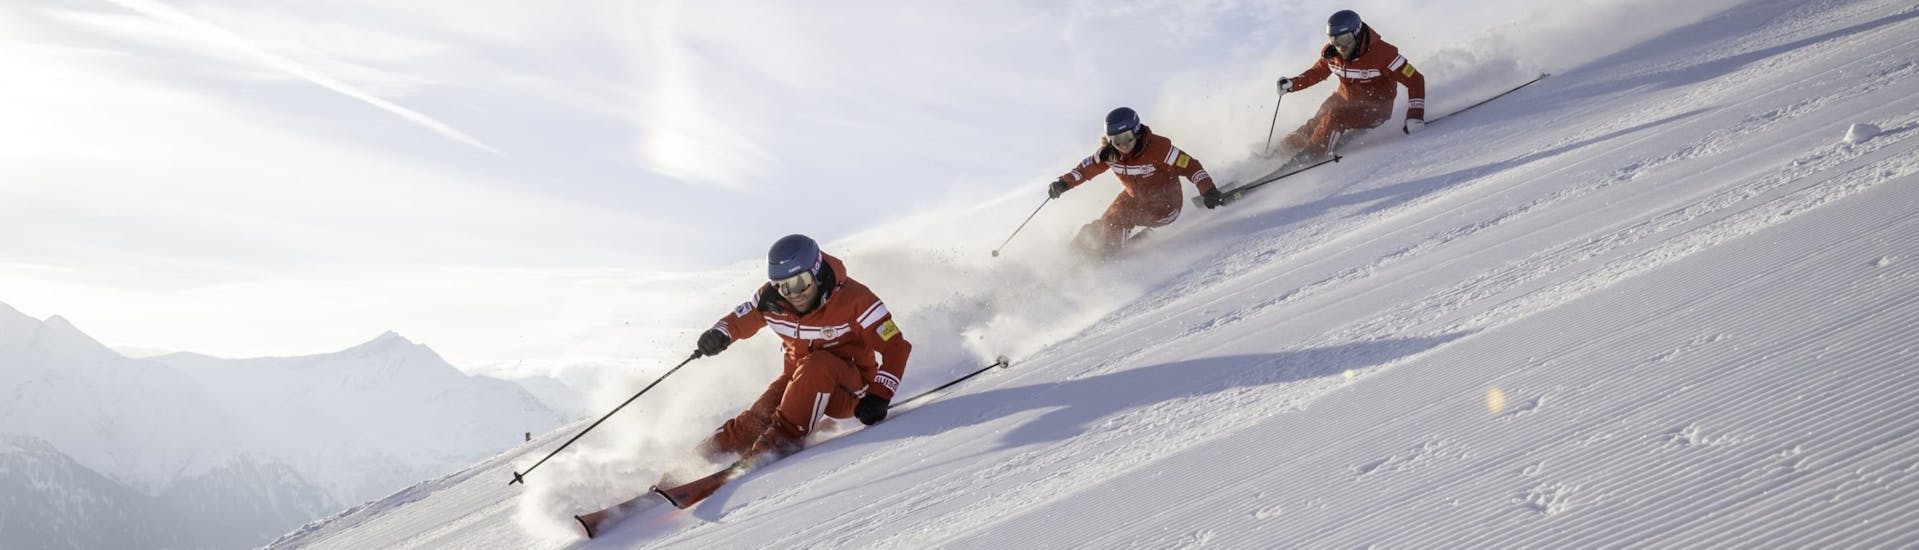 Clases de esquí privadas para adultos a partir de 14 años.